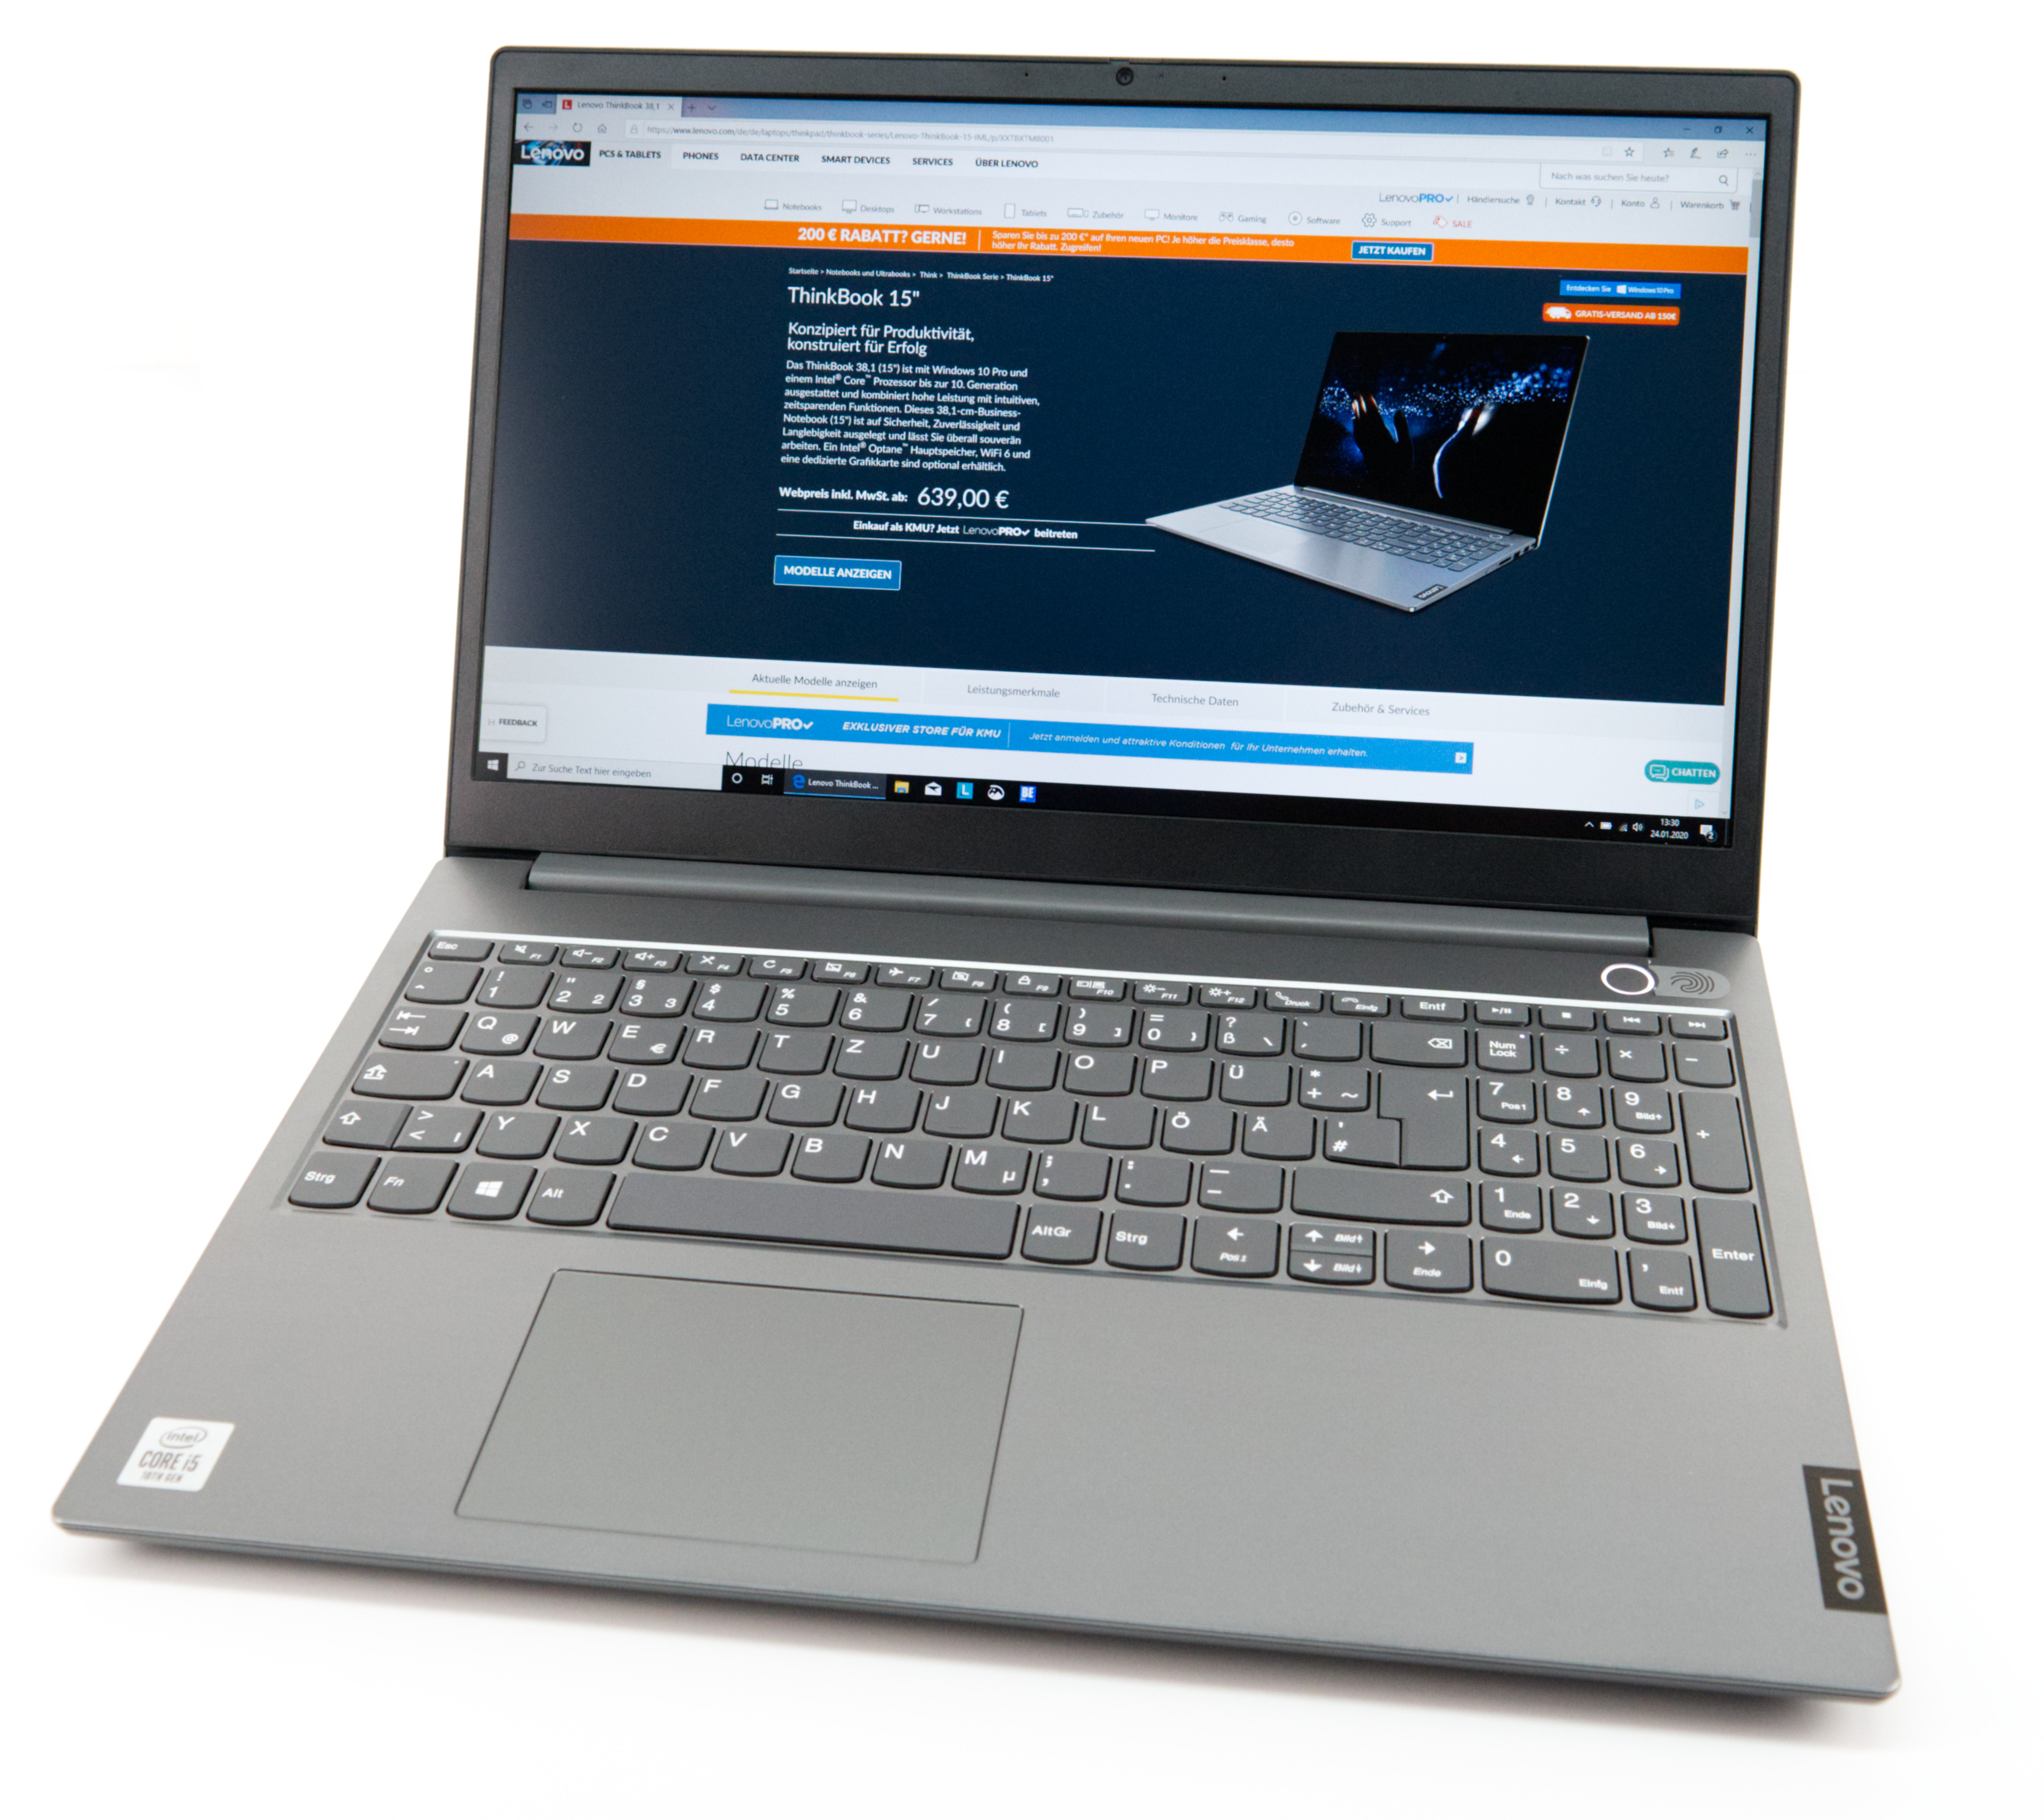 Lenovo ThinkBook 15 - Notebookcheck.net External Reviews